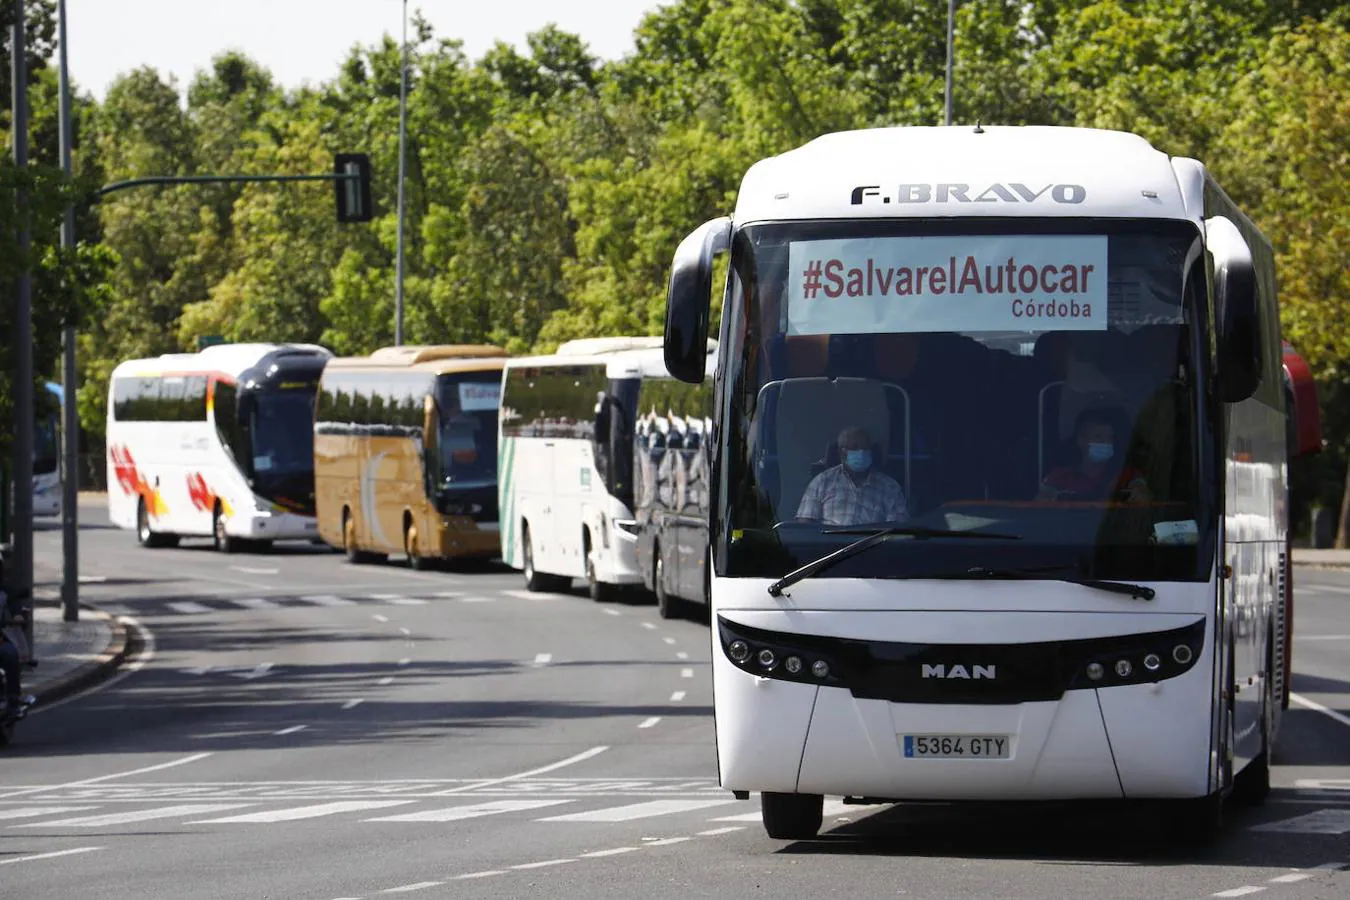 La caravana de autobuses de Córdoba, en imágenes